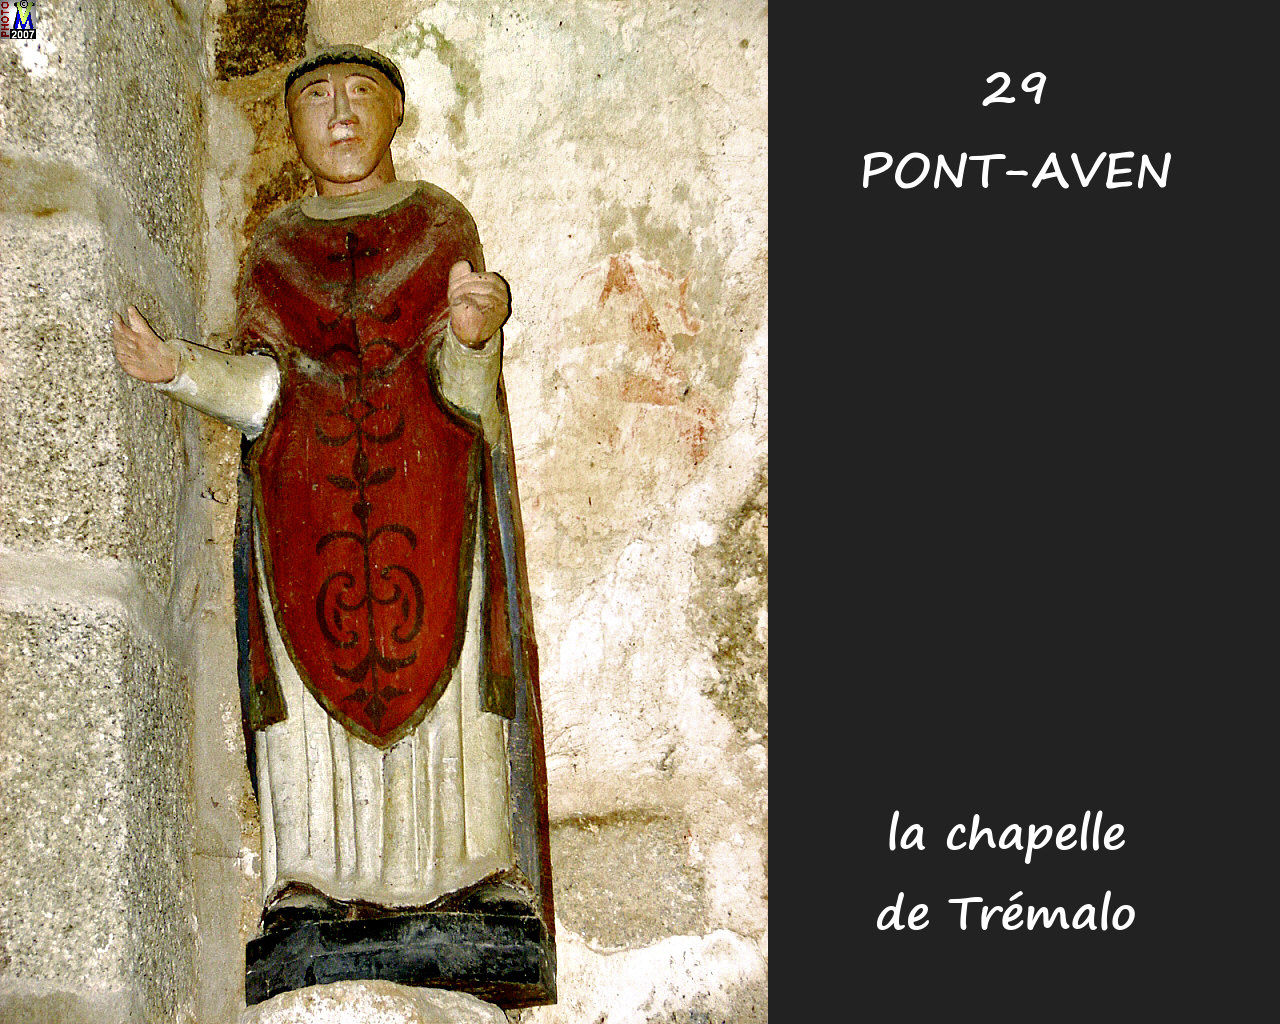 29PONT-AVEN-Tremalo-_chapelle_214.jpg